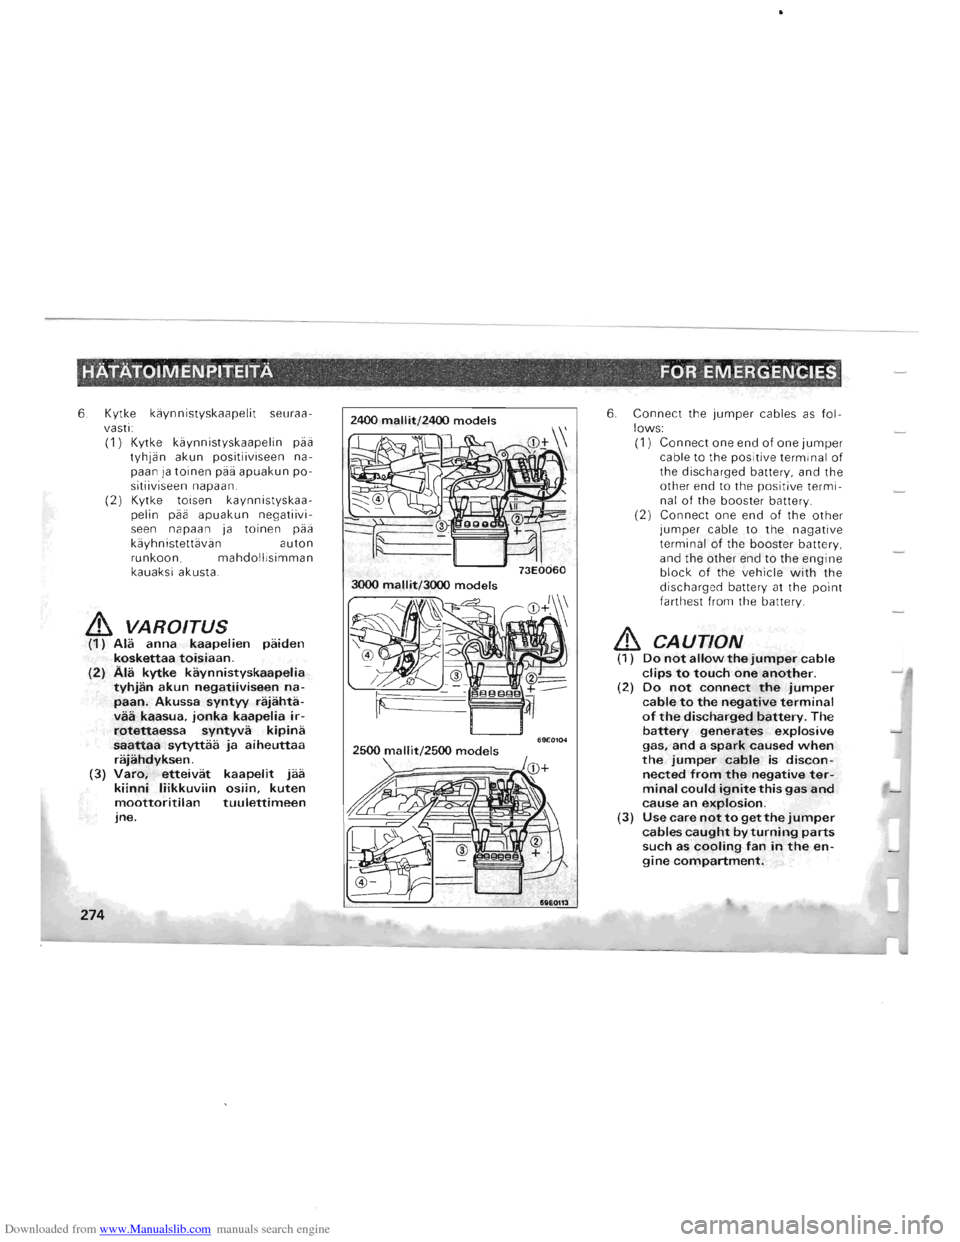 MITSUBISHI PAJERO 1996 2.G Owners Manual Downloaded from www.Manualslib.com manuals search engine HATATOIMENPITEITA . FOR  EMERGEN CIES. 
6.  Kytke  kiiynnistyskaapelit  seuraa­
vasti: 
(1) Kytke  kaynnistyskaapelin  paa tyhjan akun positi